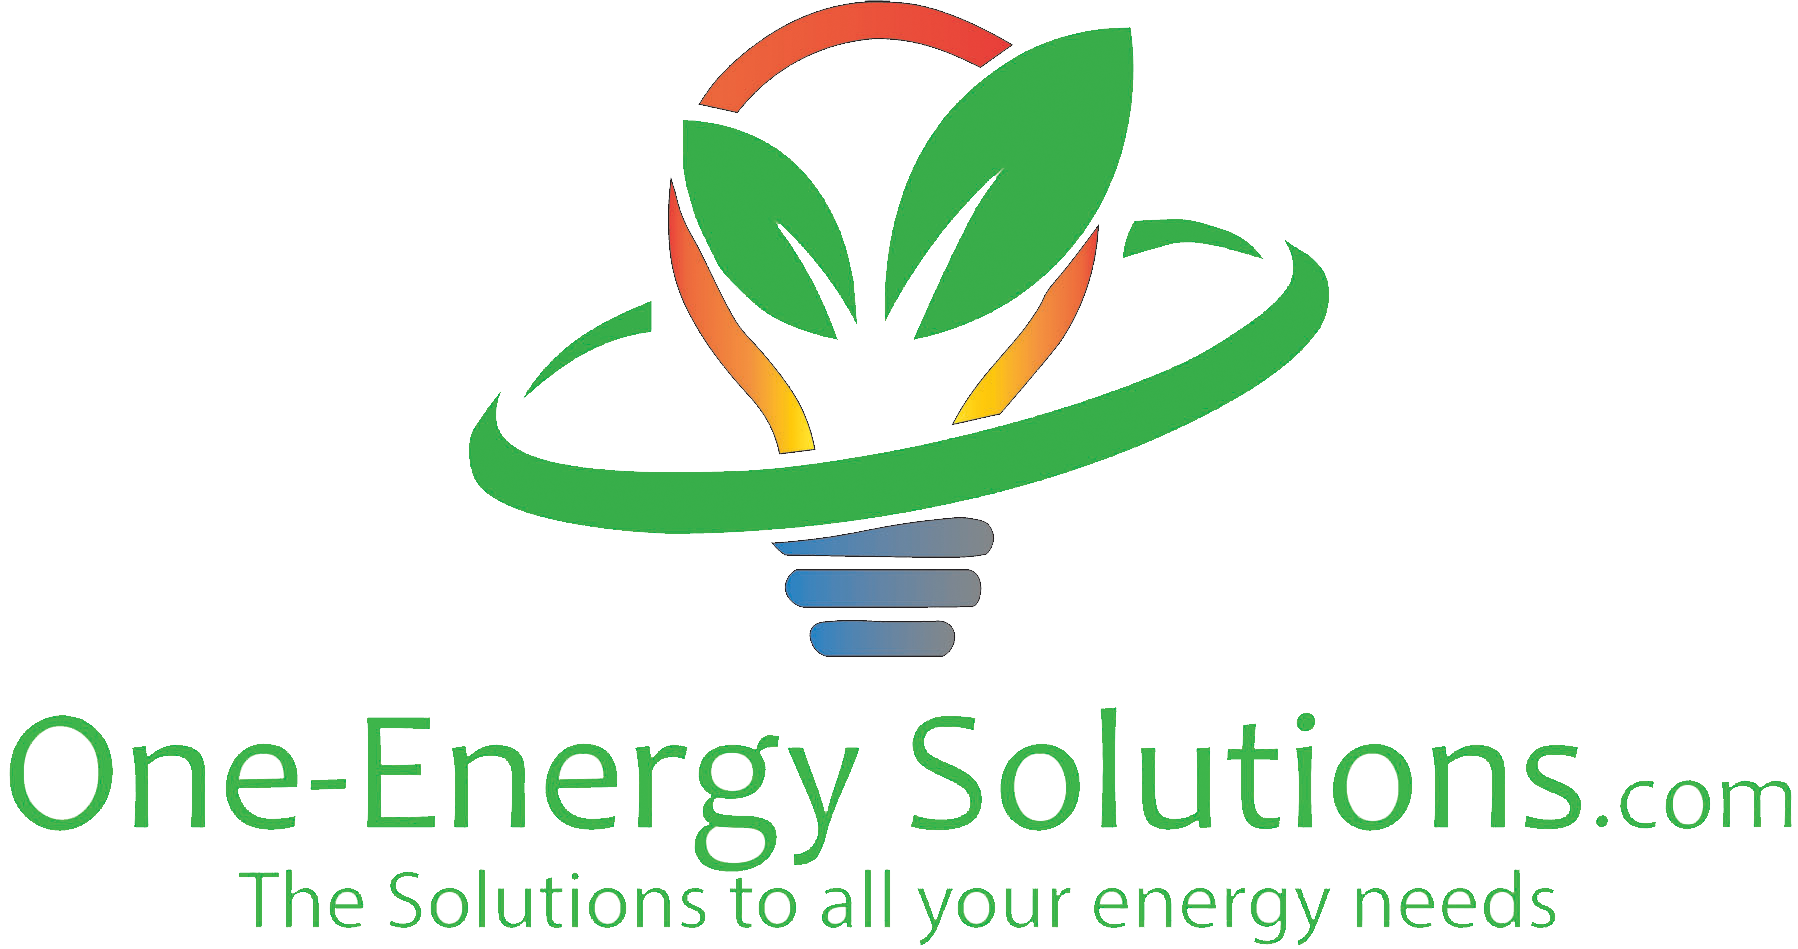 One Energy Solutions, LLC